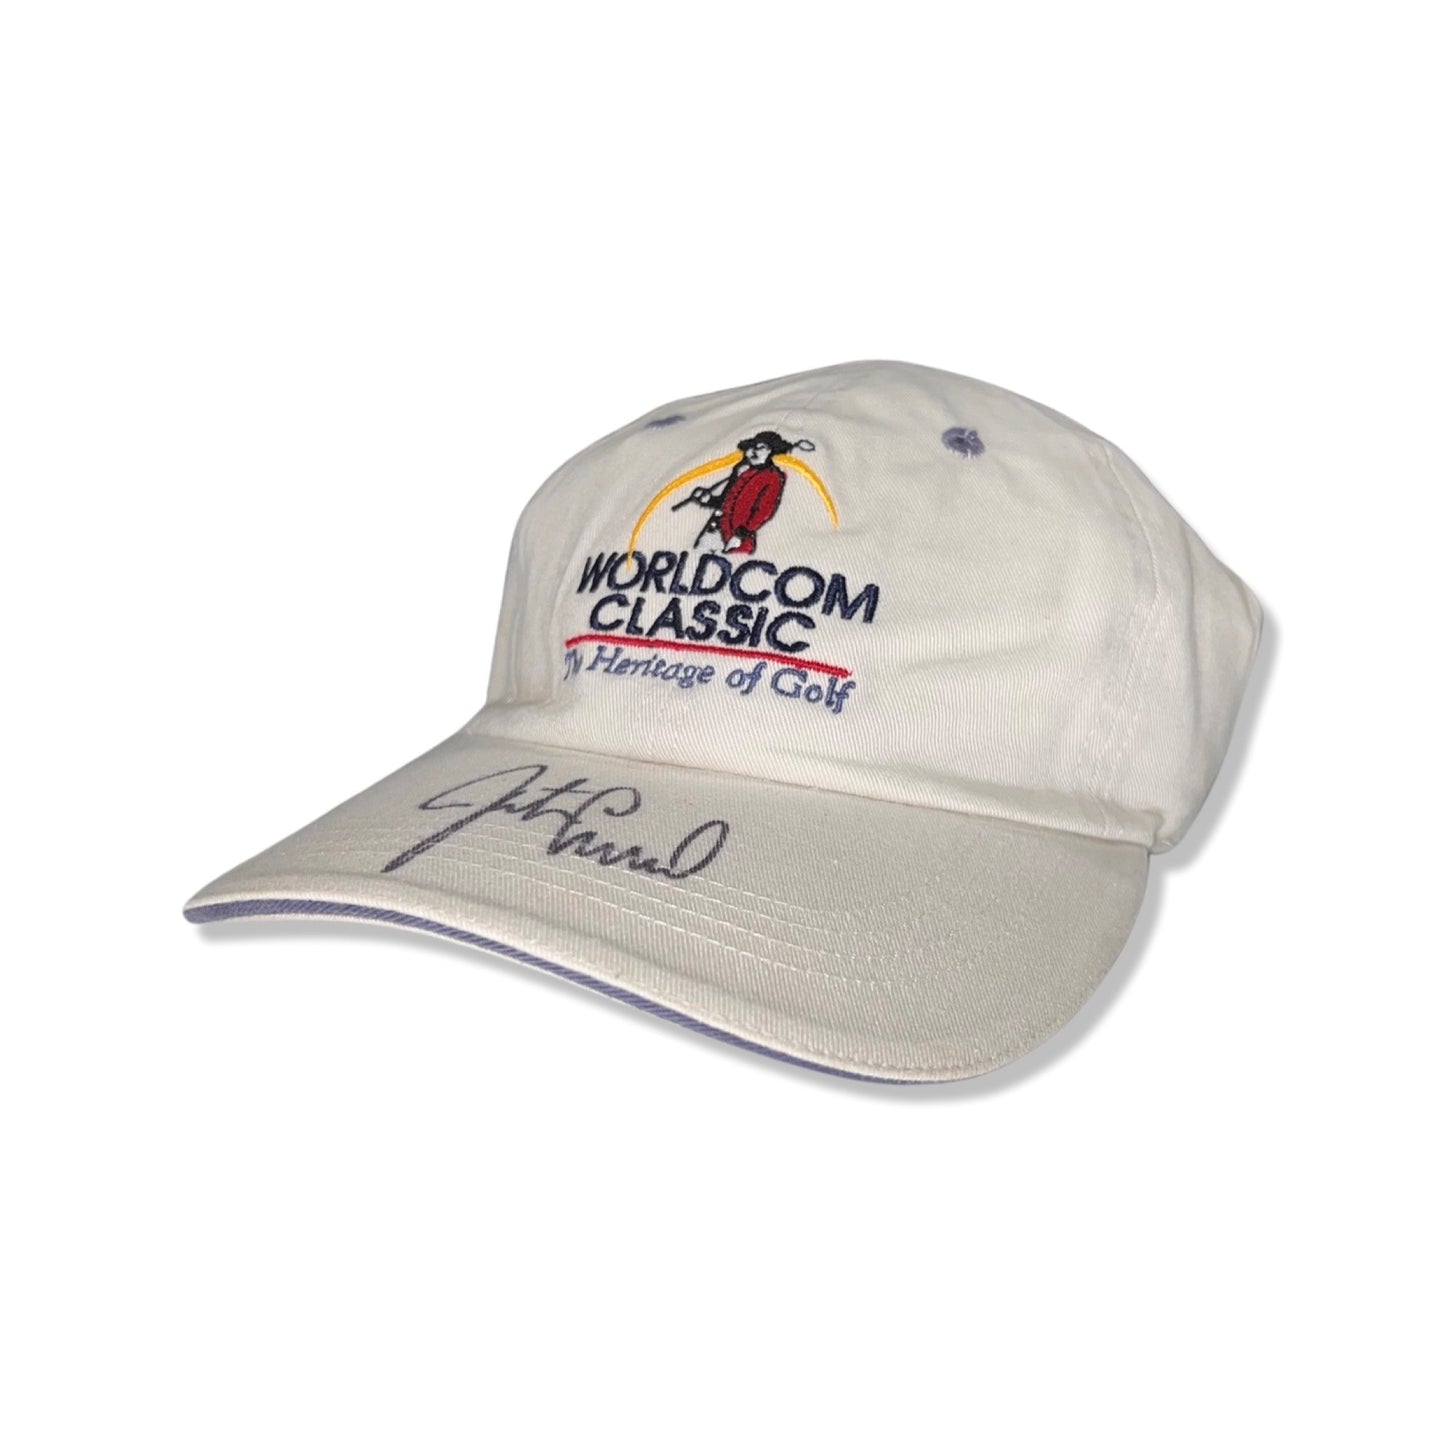 Worldcom Classic Hat - Signed by Justin Leonard